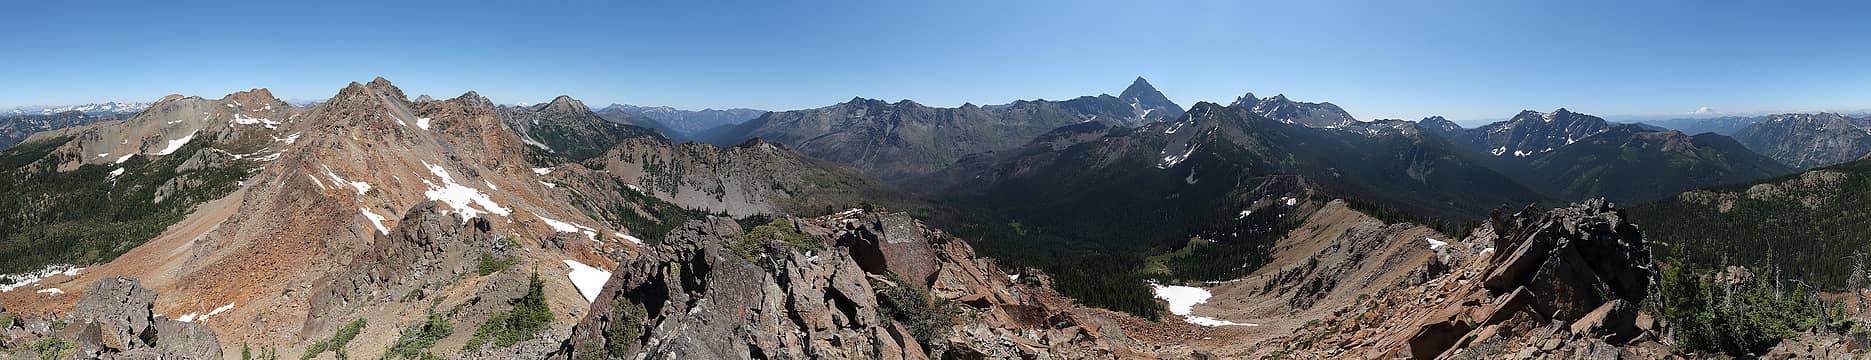 Pano from Scatter Peaks SE ridge